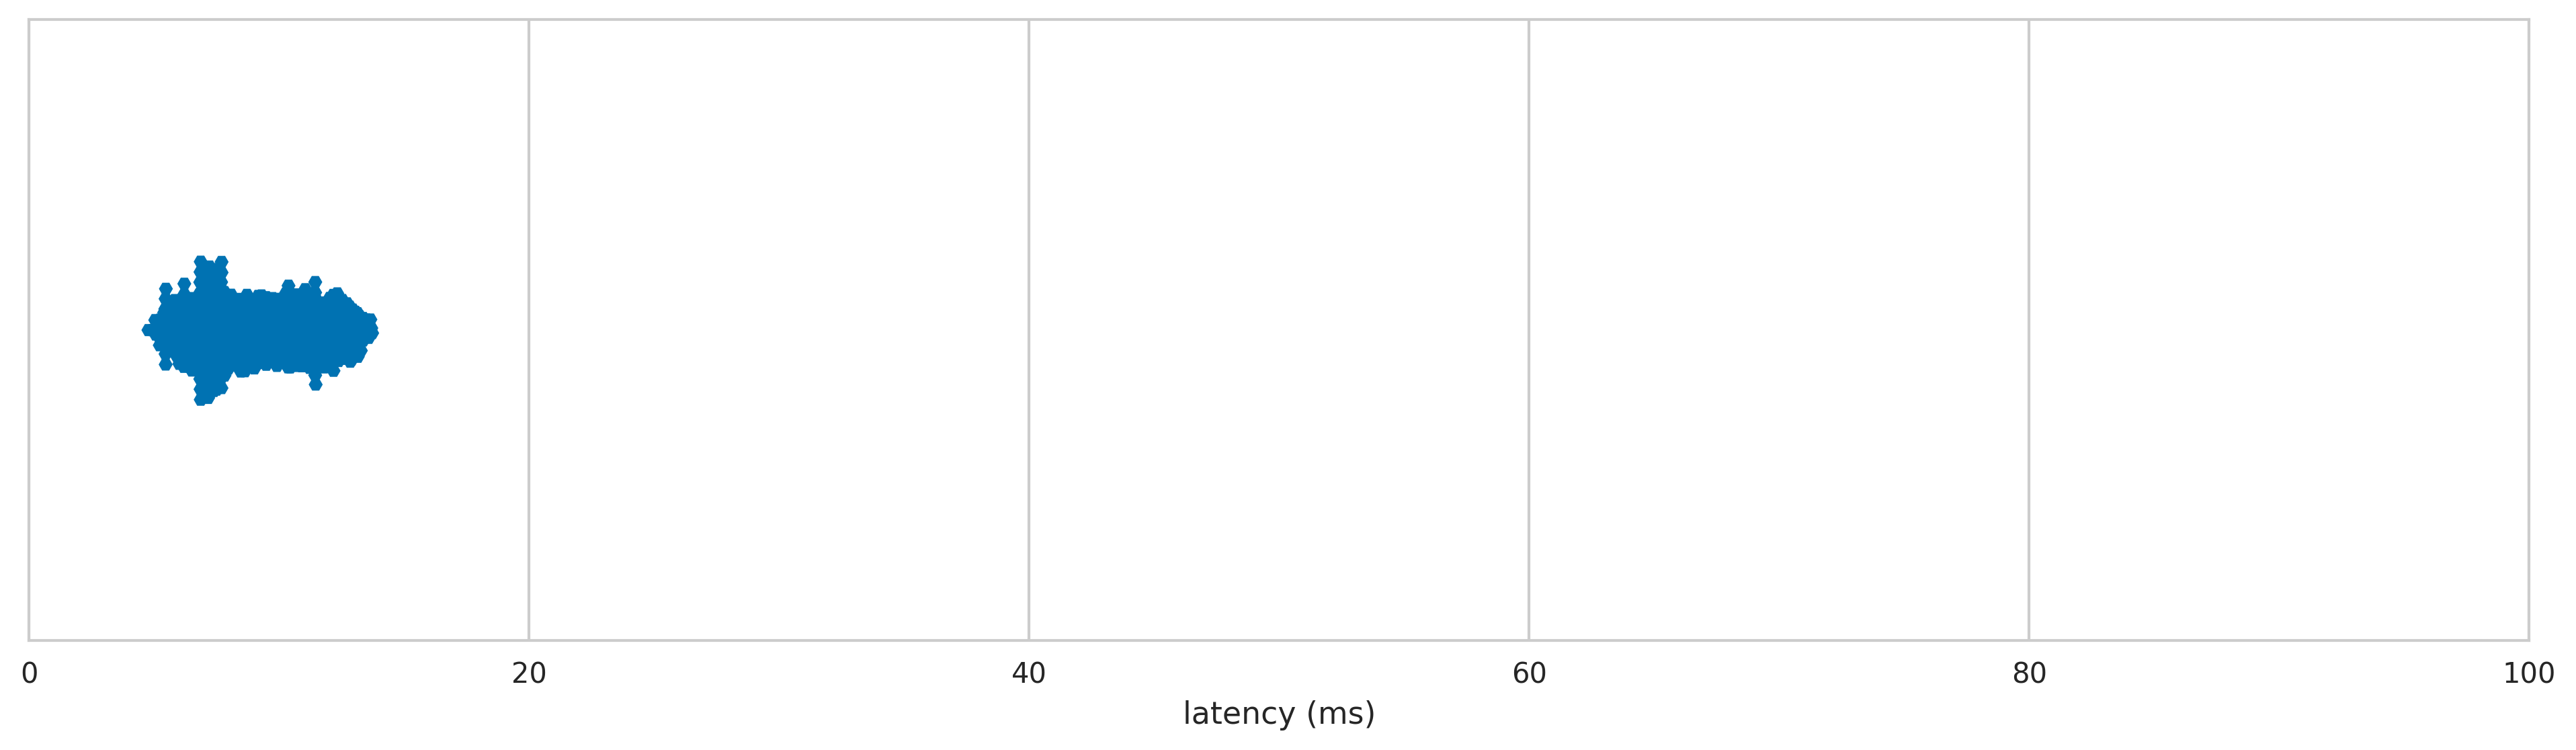 _lmbRazor Diamondback latency distribution 